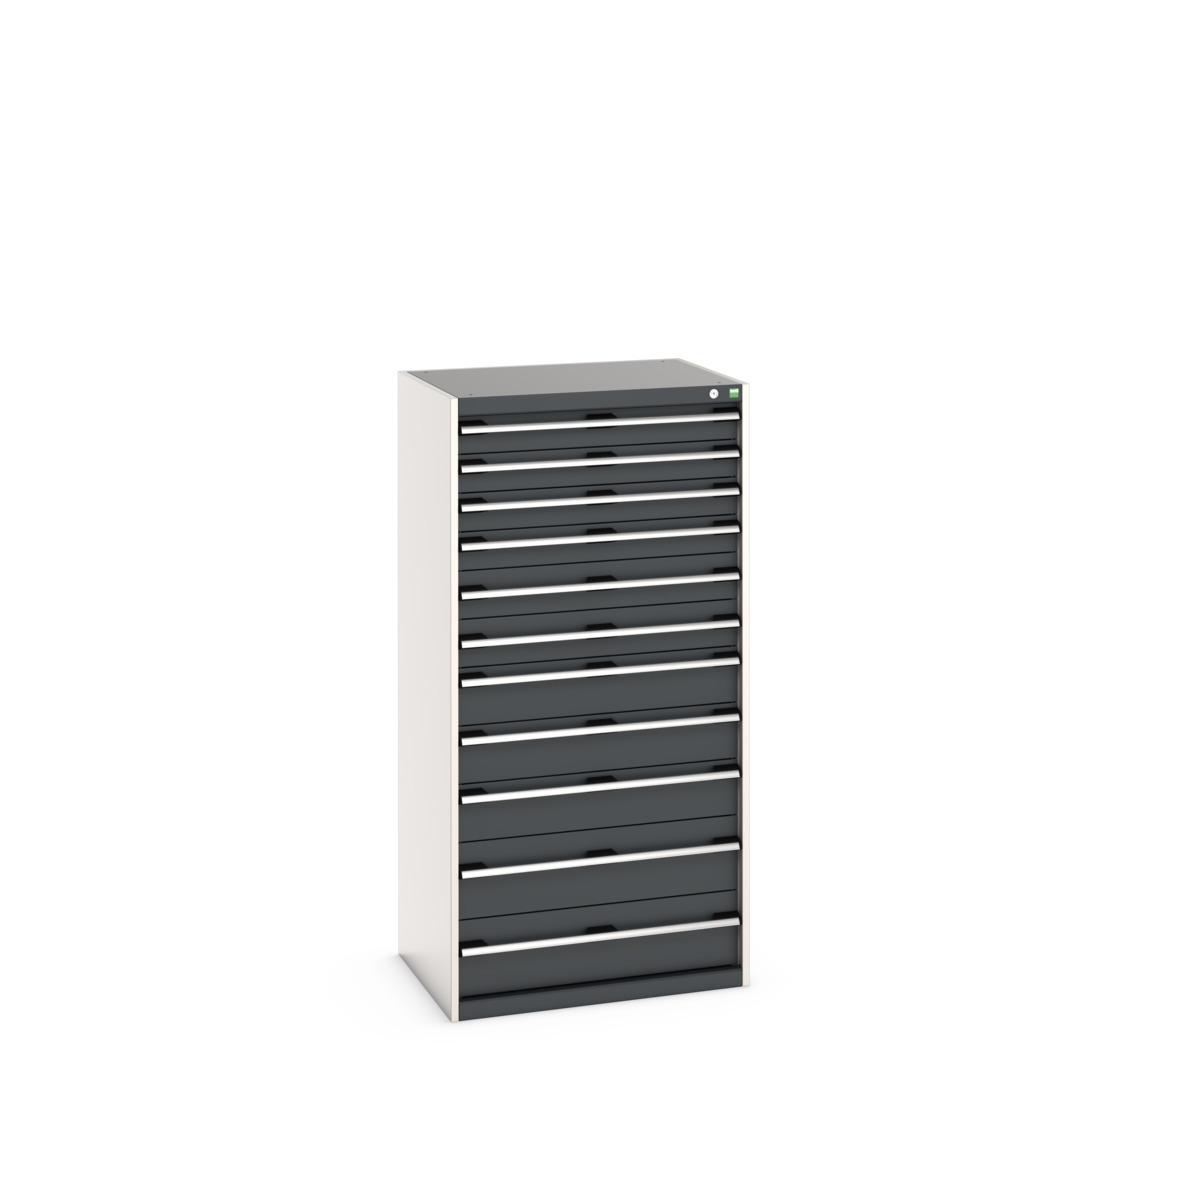 40020070. - cubio drawer cabinet